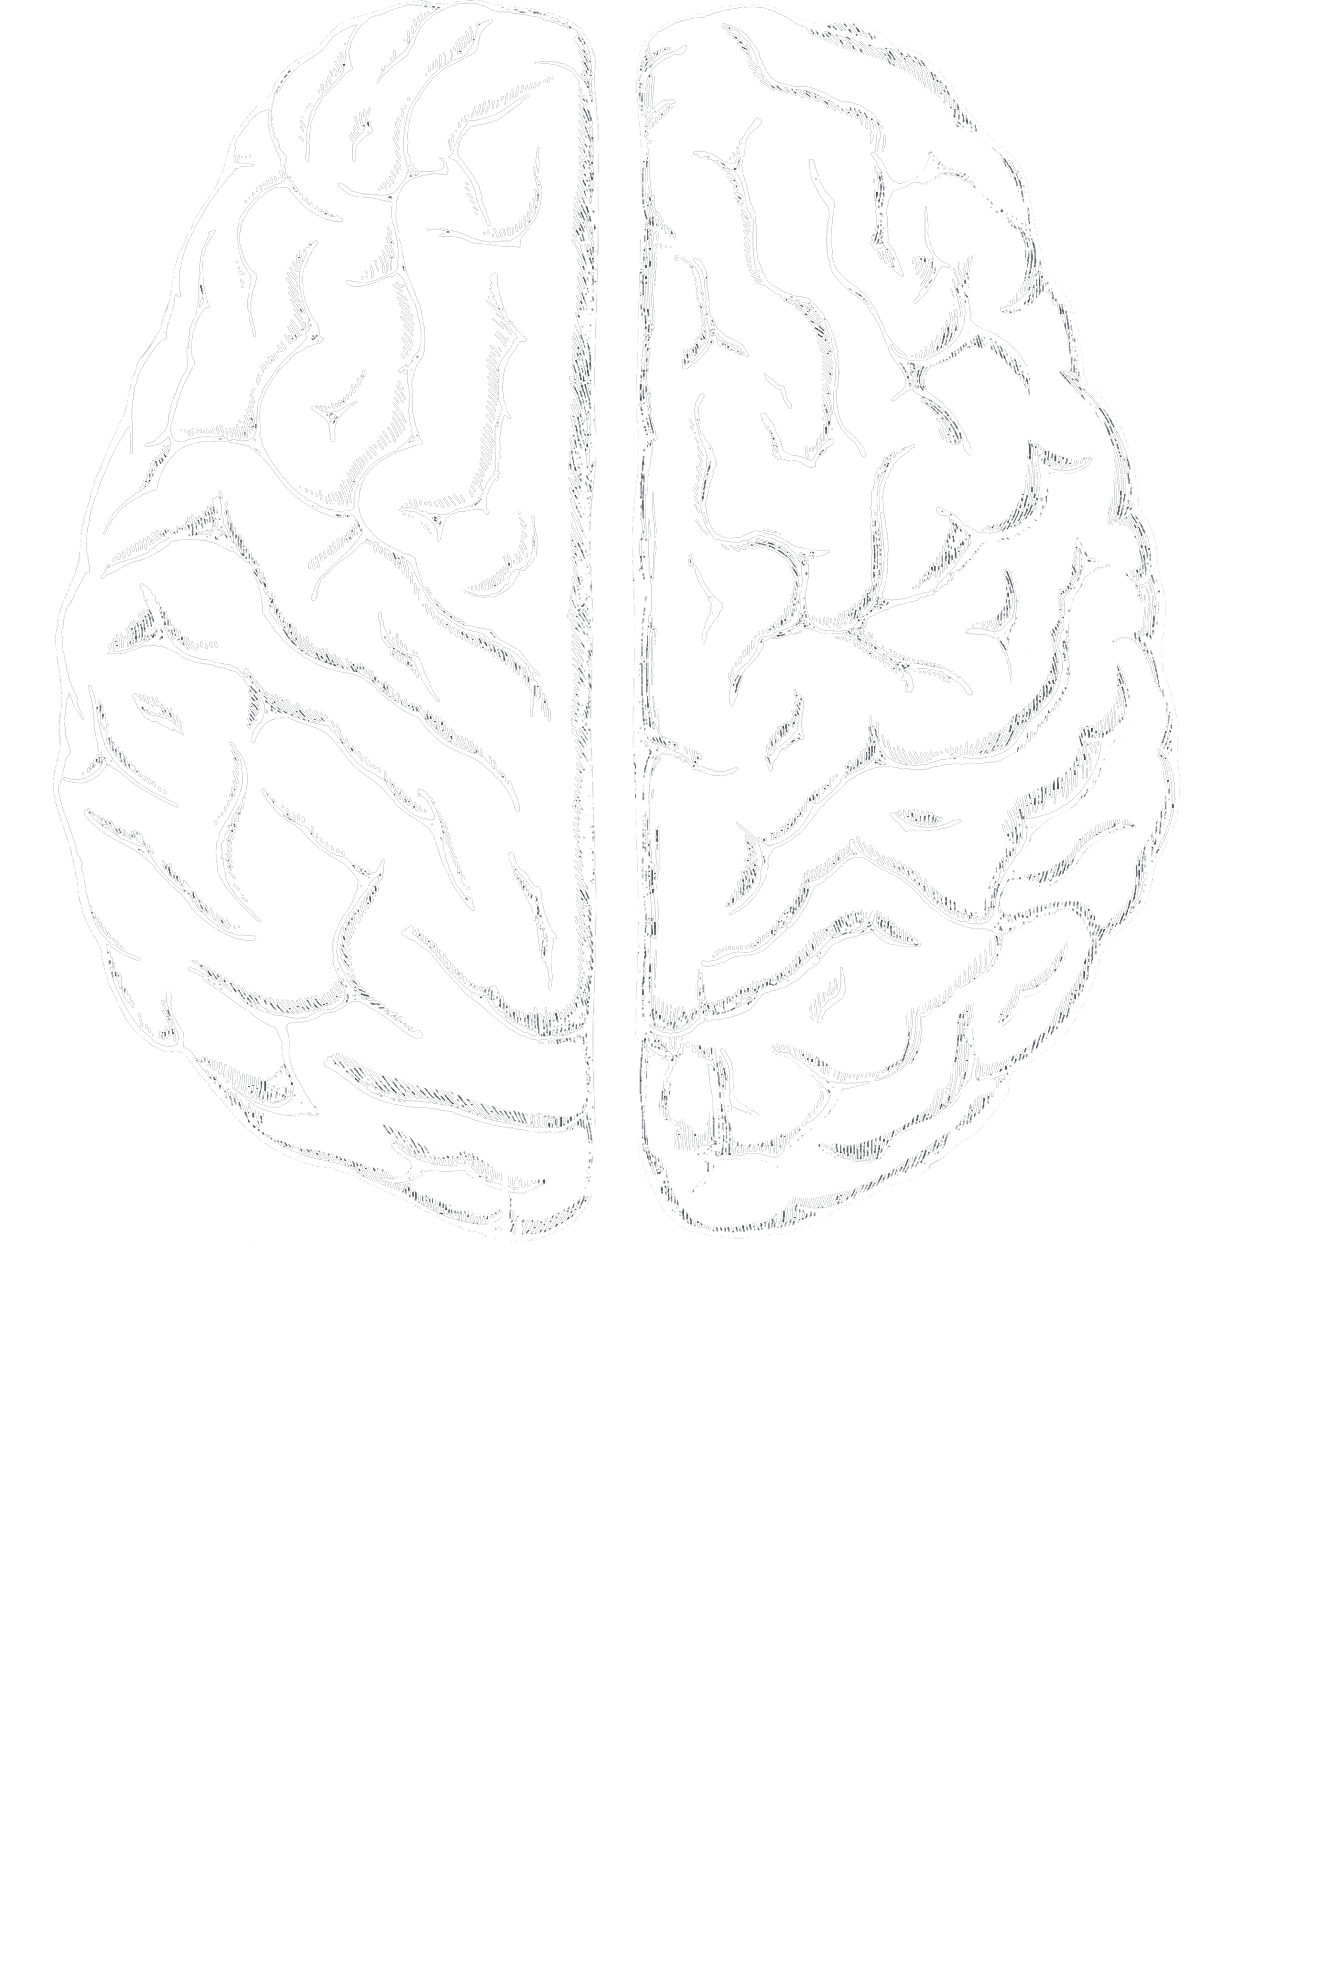 split brain sound